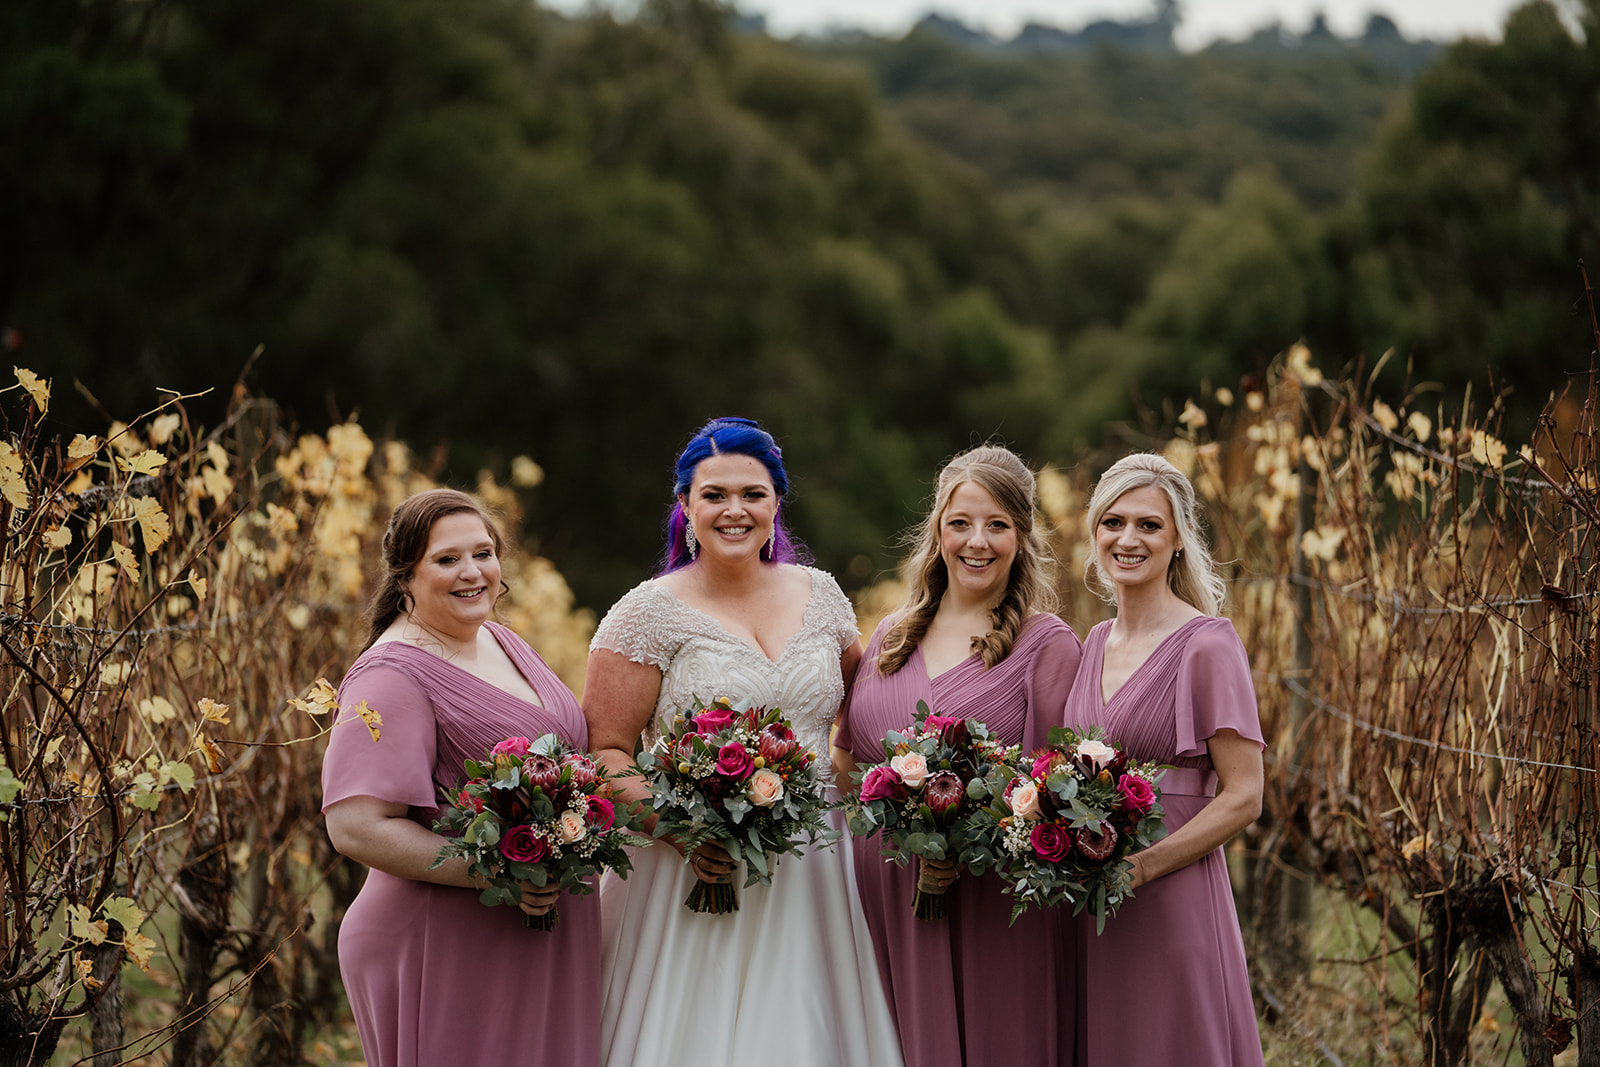 Dusty pink bridesmaids dresses.